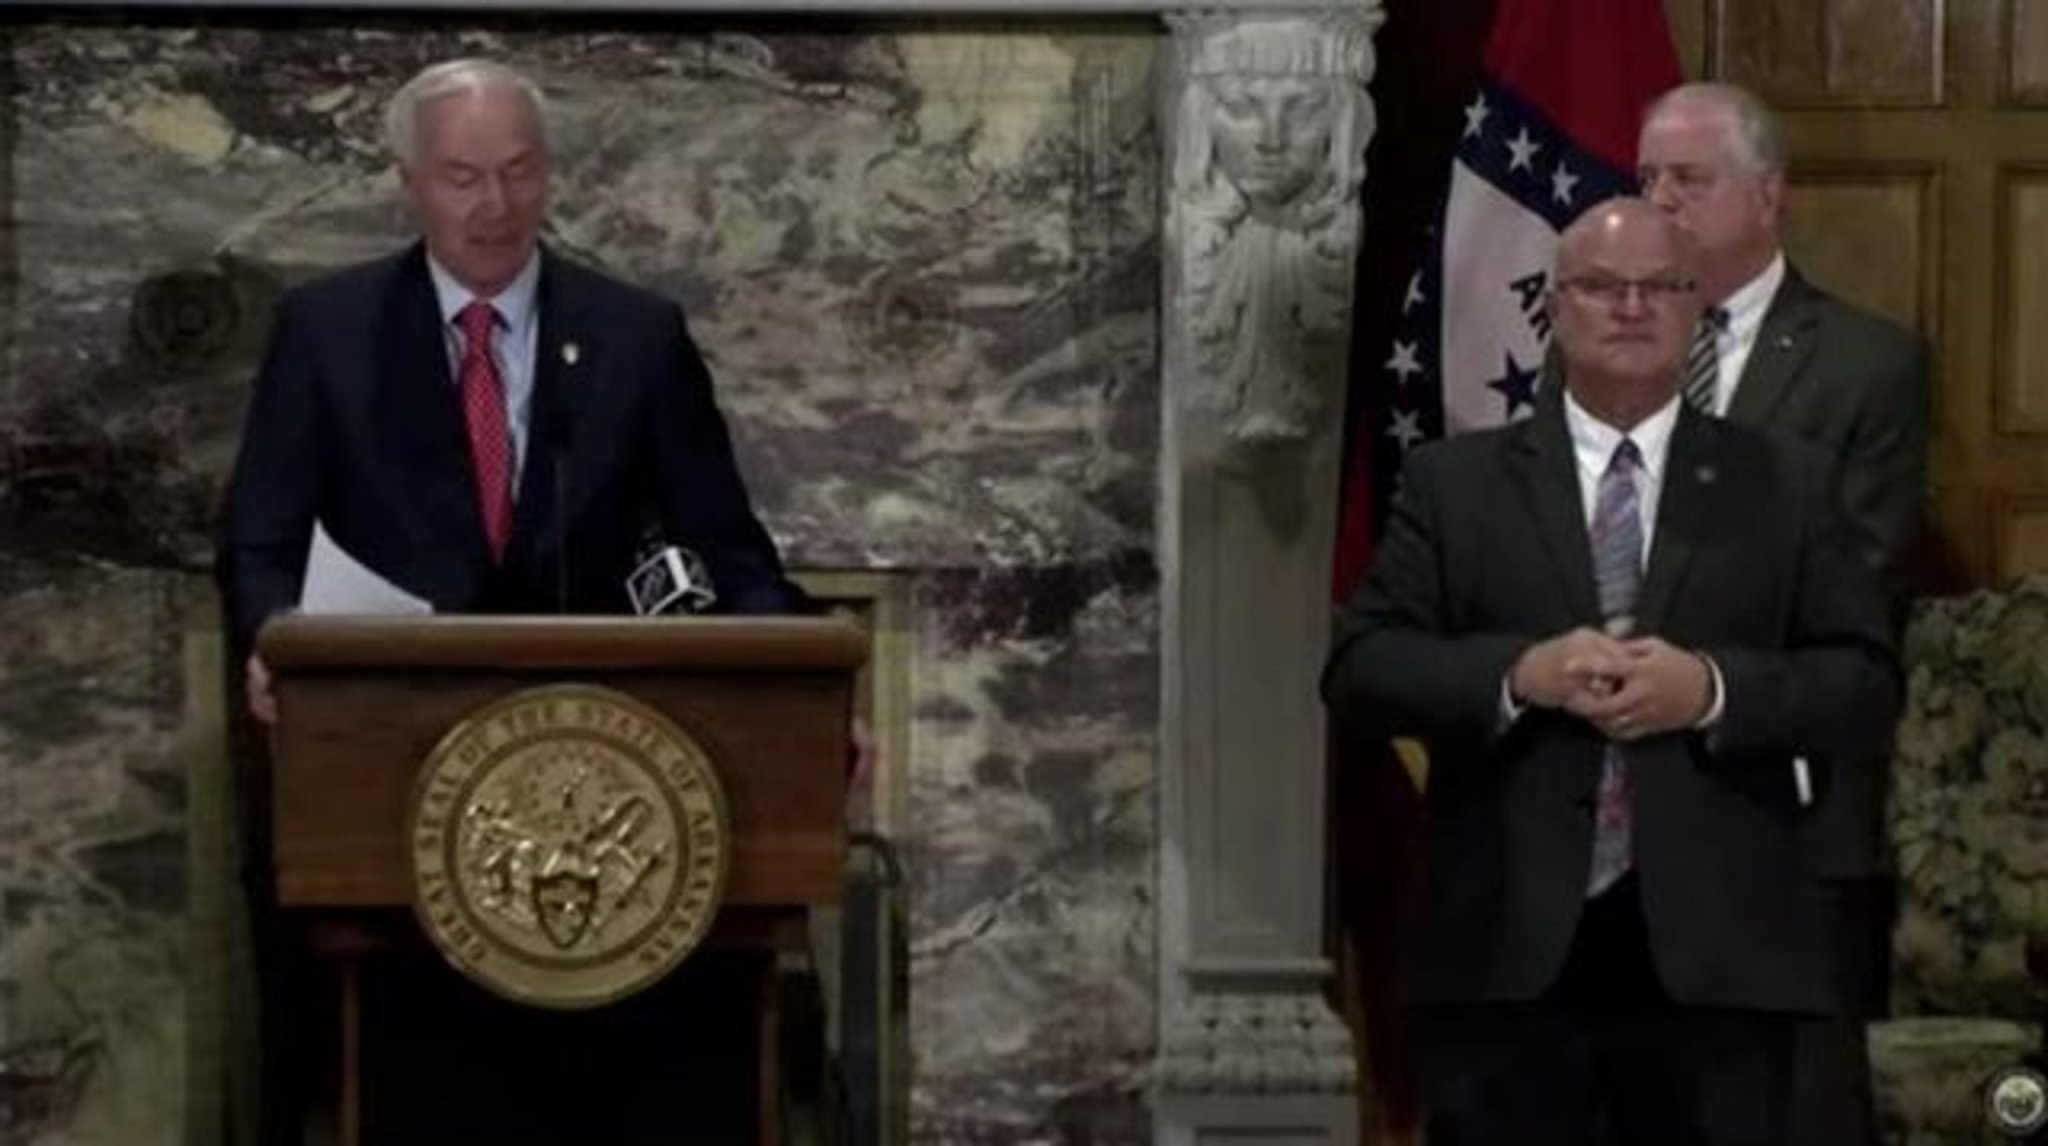 Arkansas governor Asa Hutchinson calls the Crawford County violent arrest "reprehensible conduct."